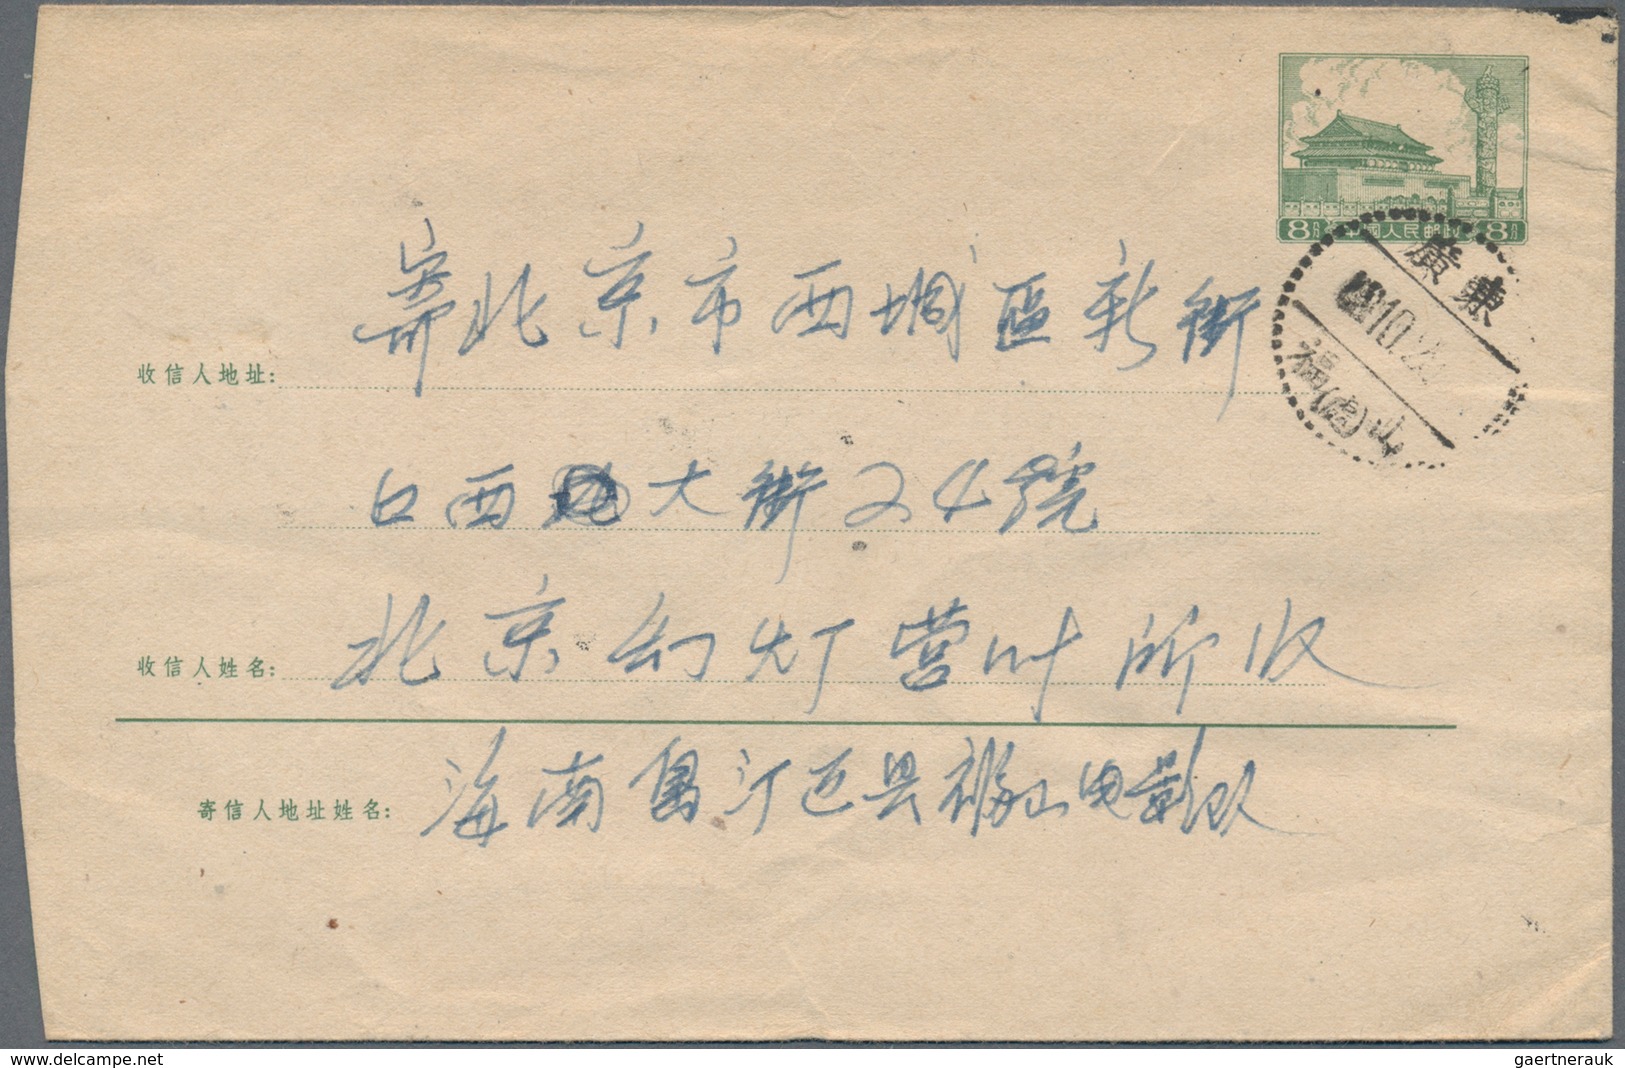 China - Volksrepublik - Ganzsachen: 1958/59, Envelope 8 F. Green (2), Imprint 6-1958 Canc. "Szechuan - Postcards